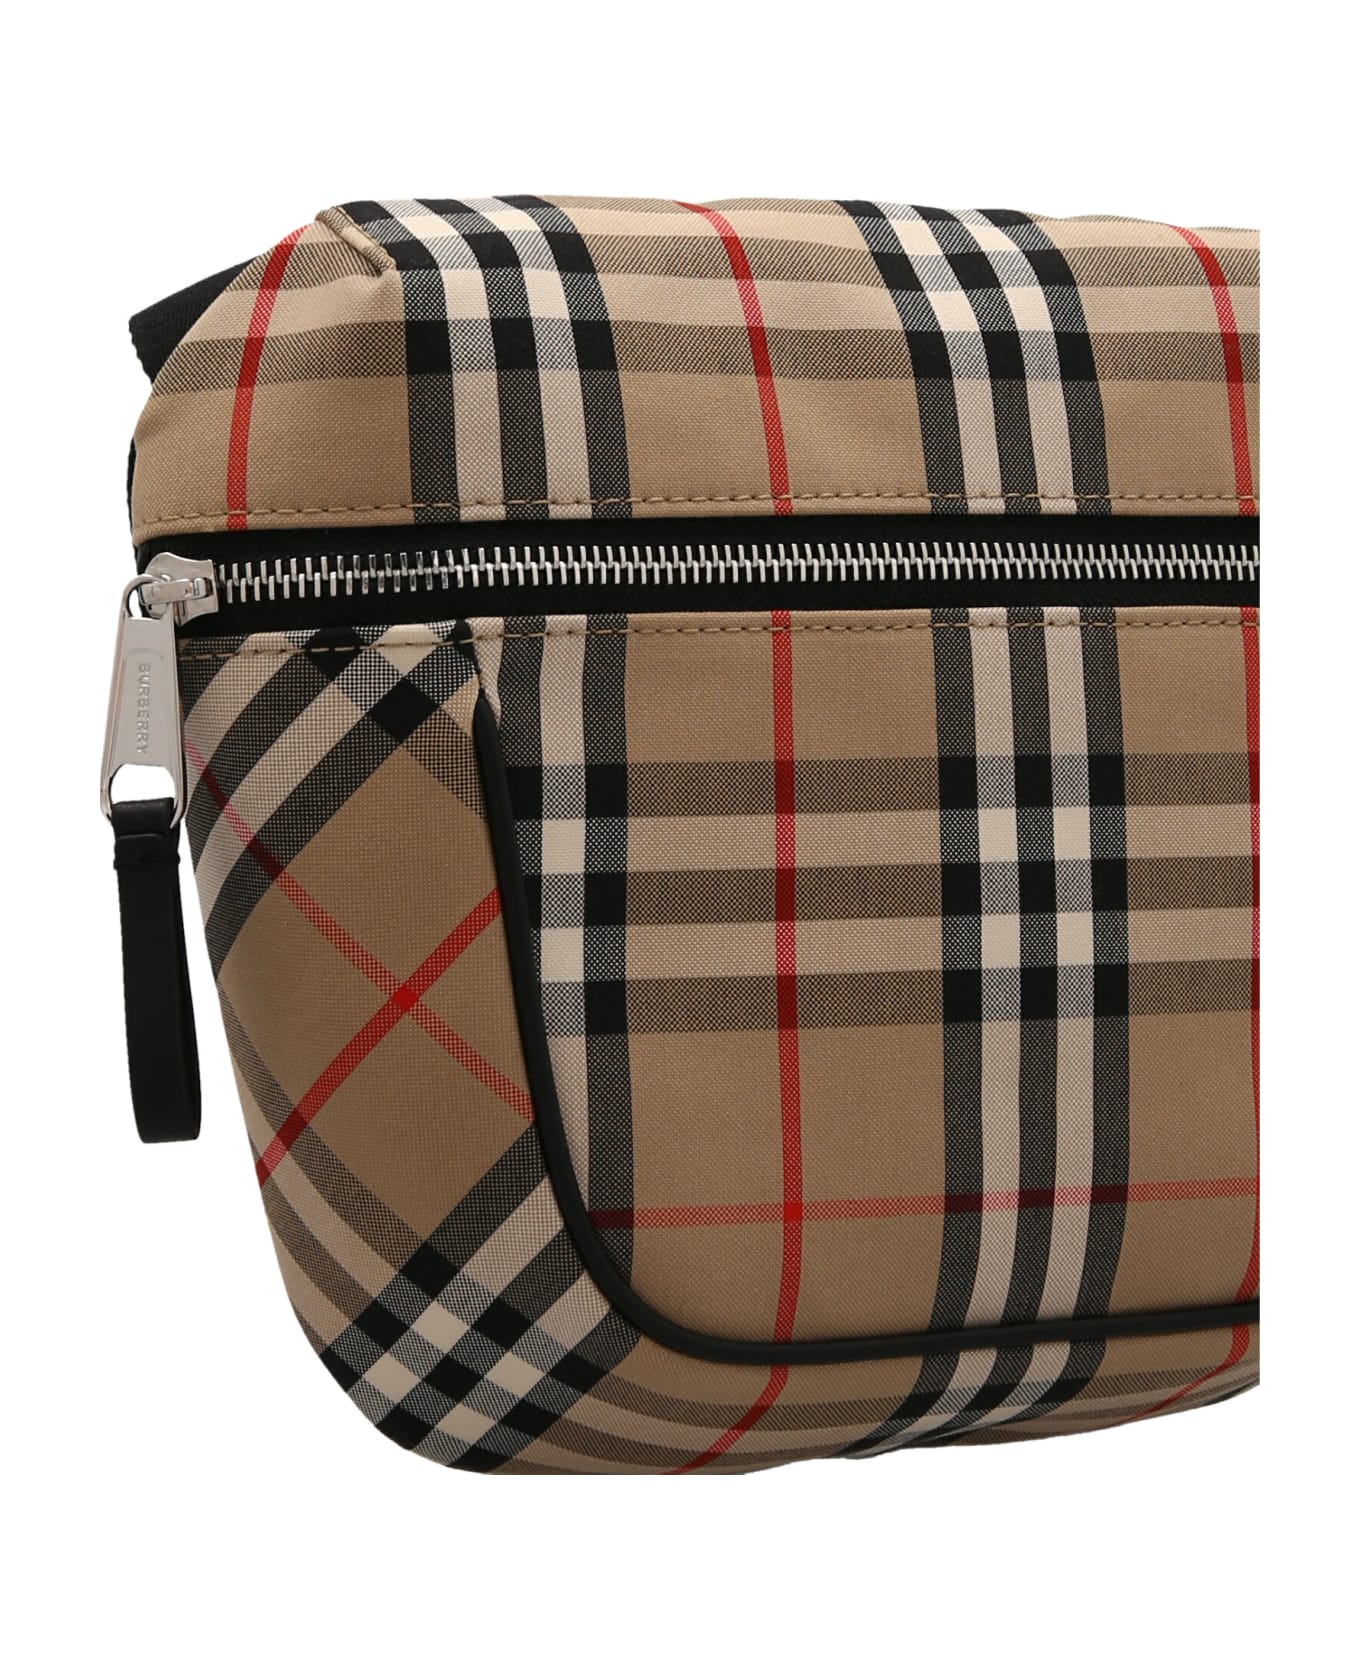 Burberry 'archie' Crossbody Bag - Beige